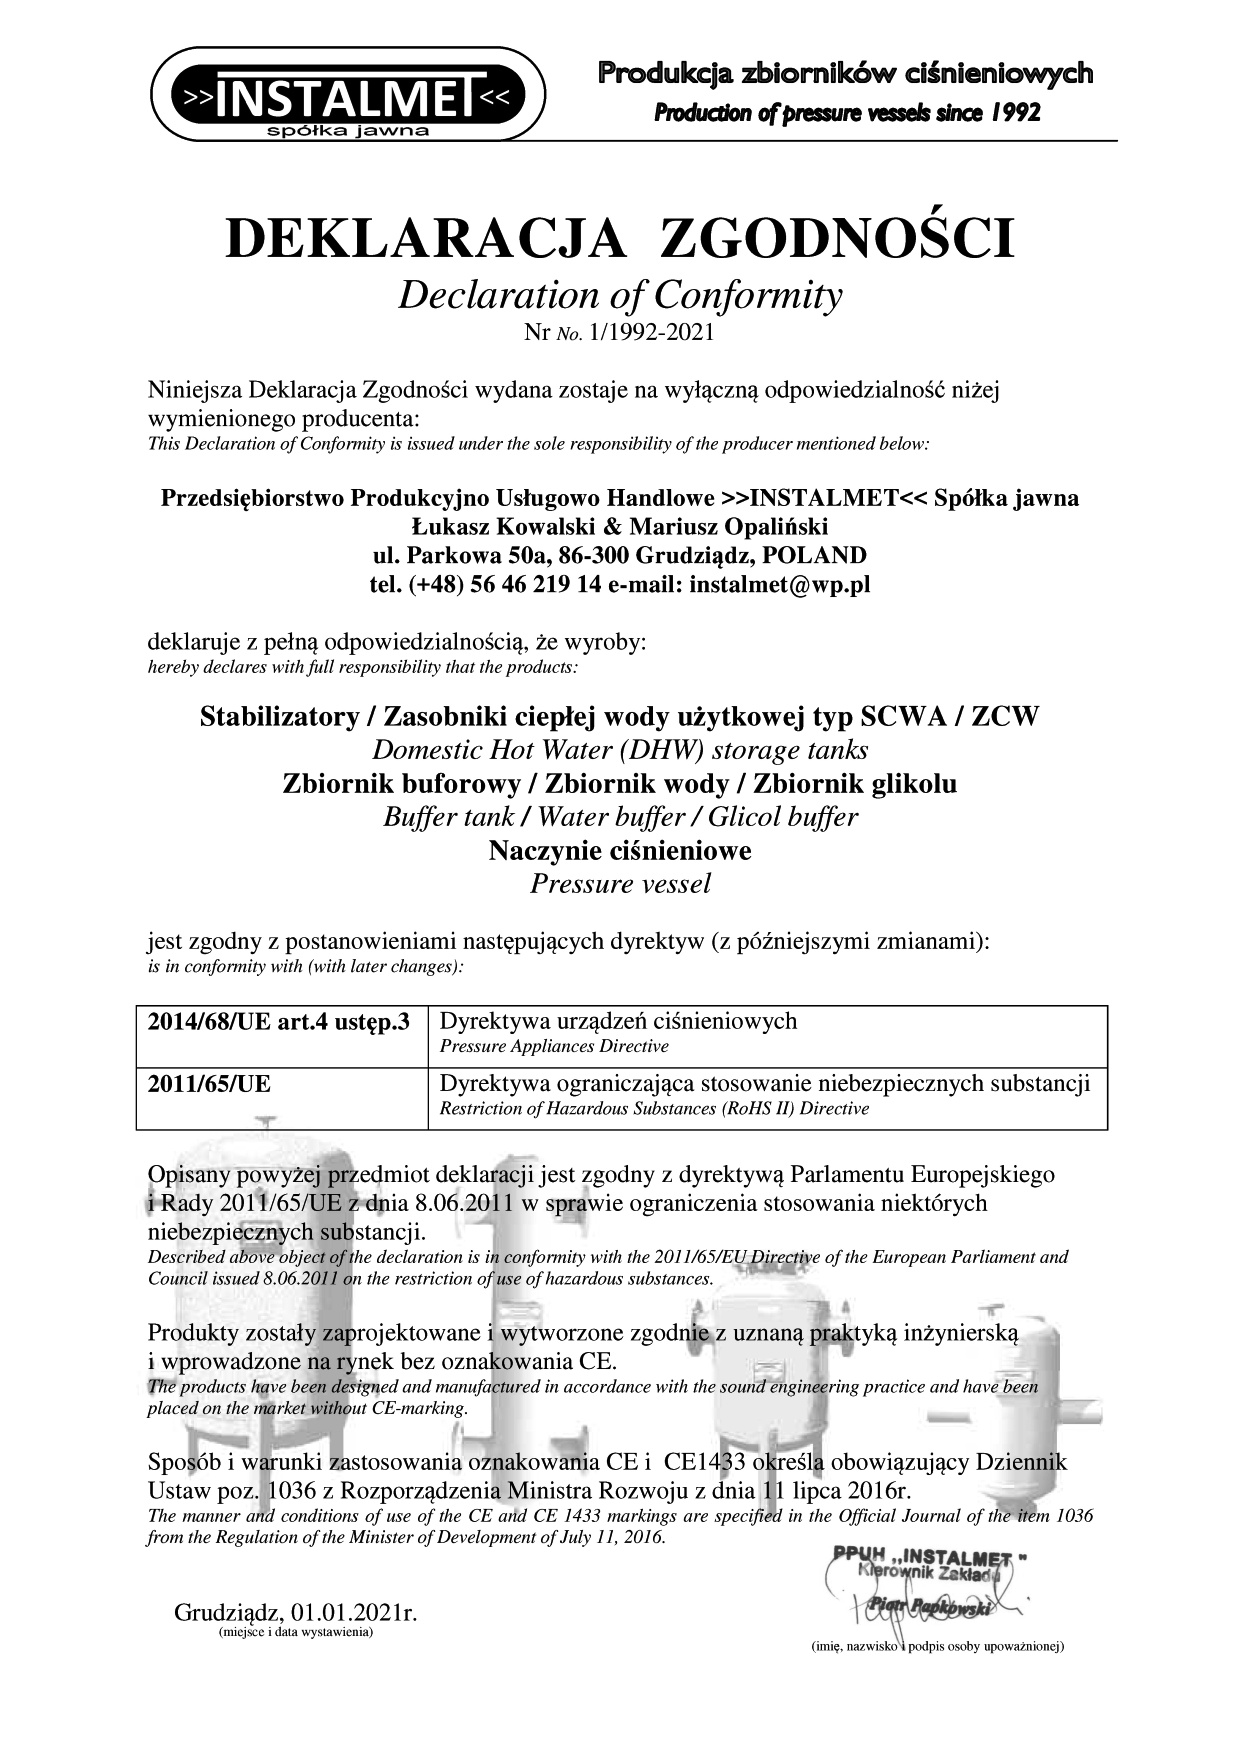 Declaration of confirmity 1992 - 2021